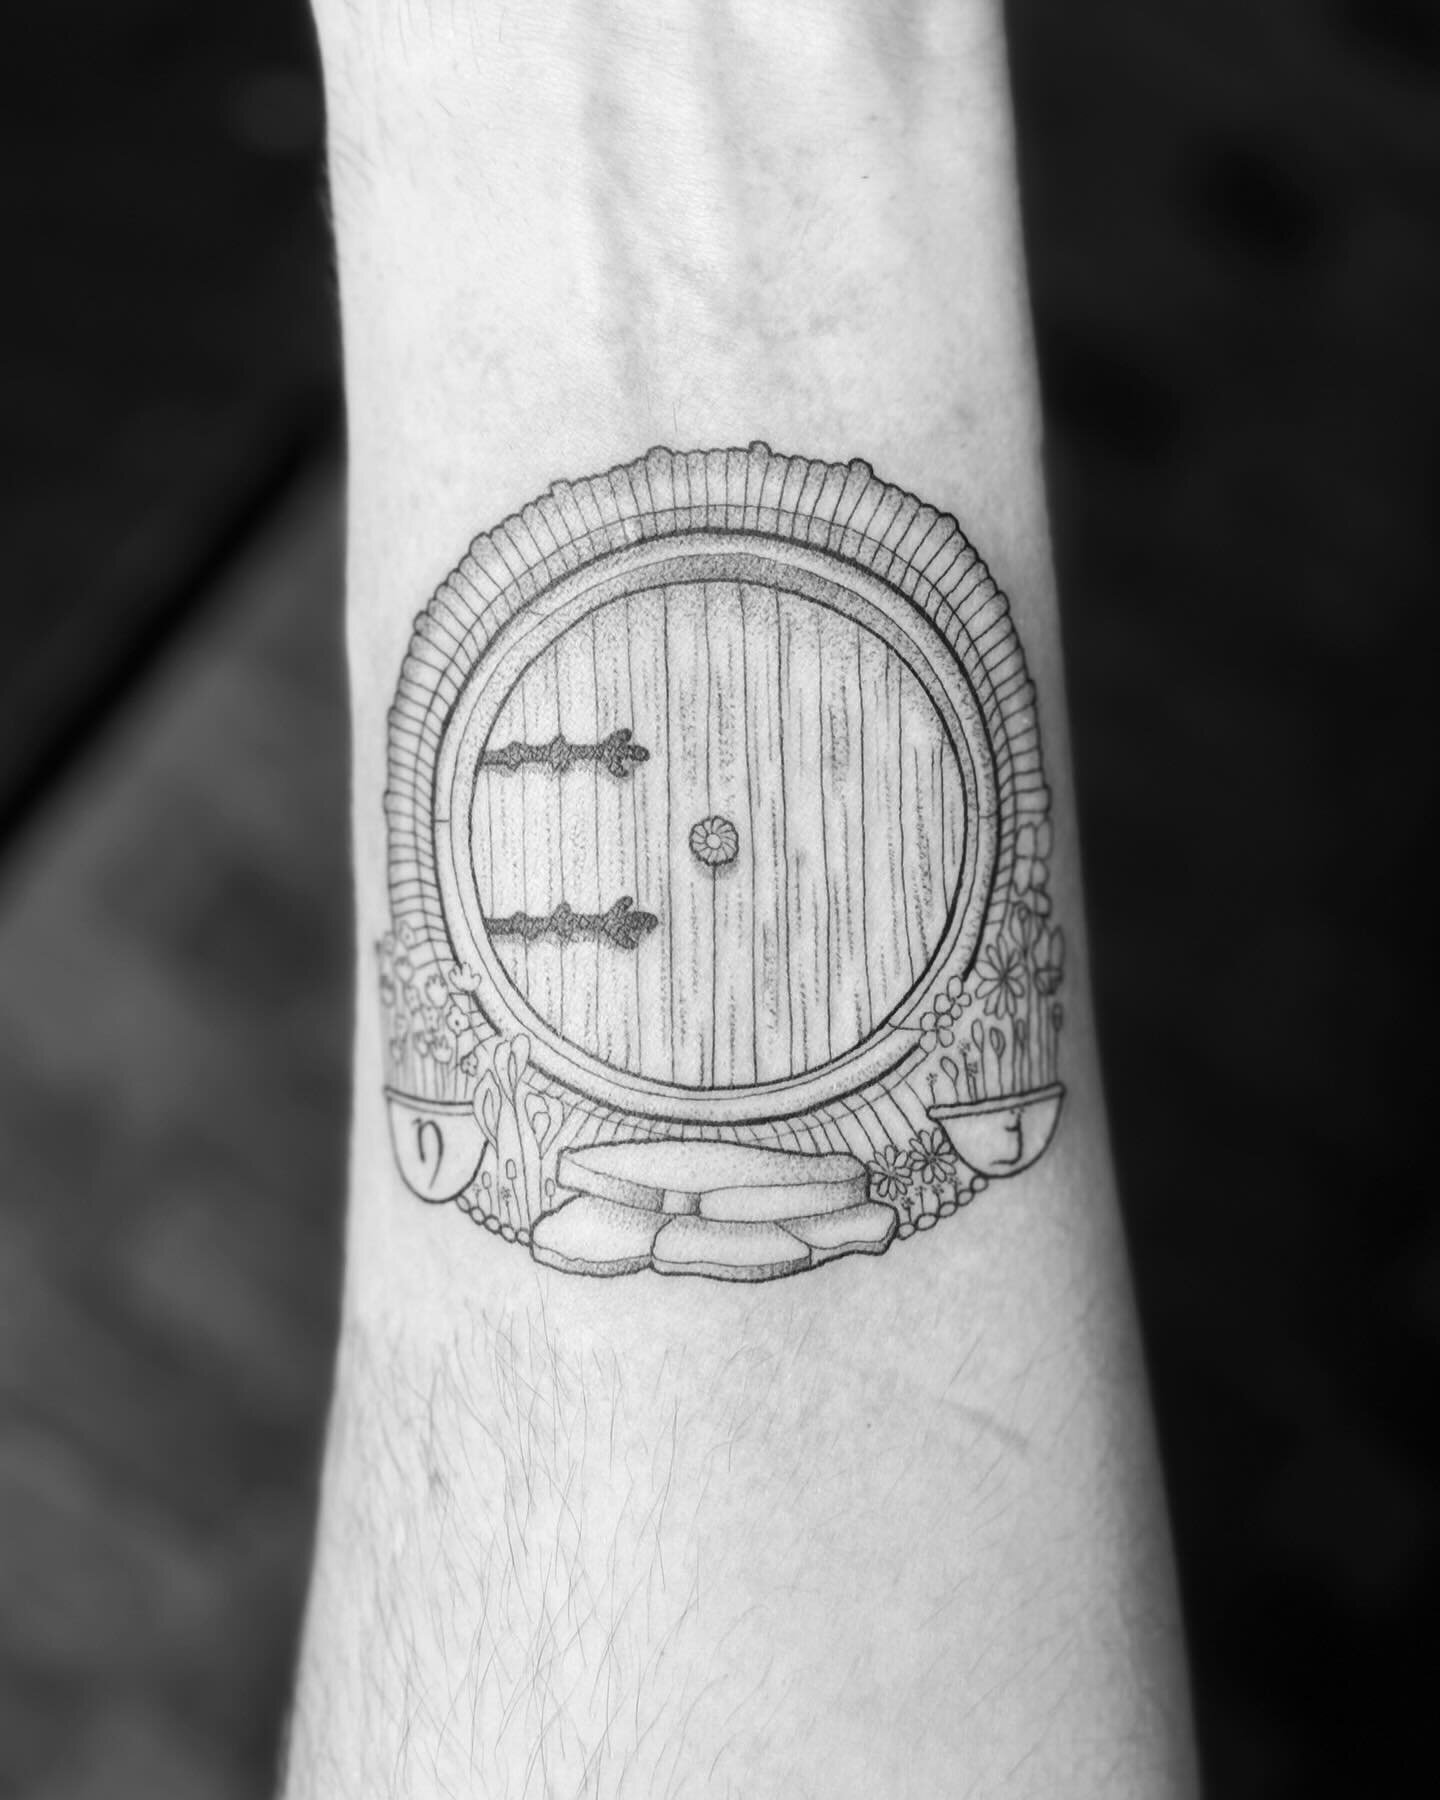 Hobbit Door Tattoo for @davewsmatts ✌️
.
.
.
#tattooideas #dotworktattoo #finelinetattoo #hobbit #tattooist